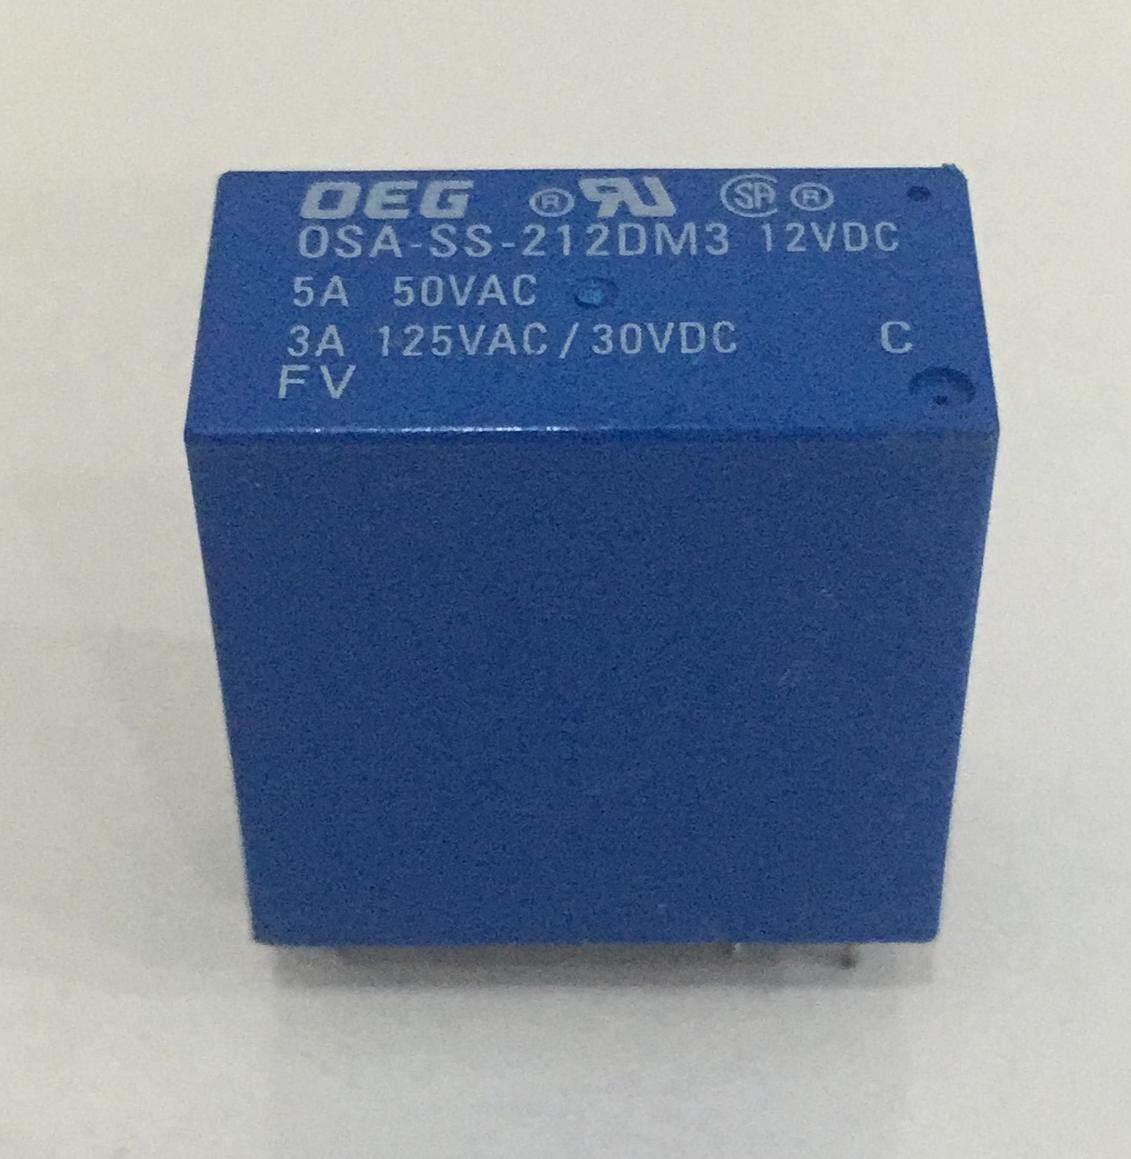 OSA-SS-212DM3 12VDC 5A ROLE